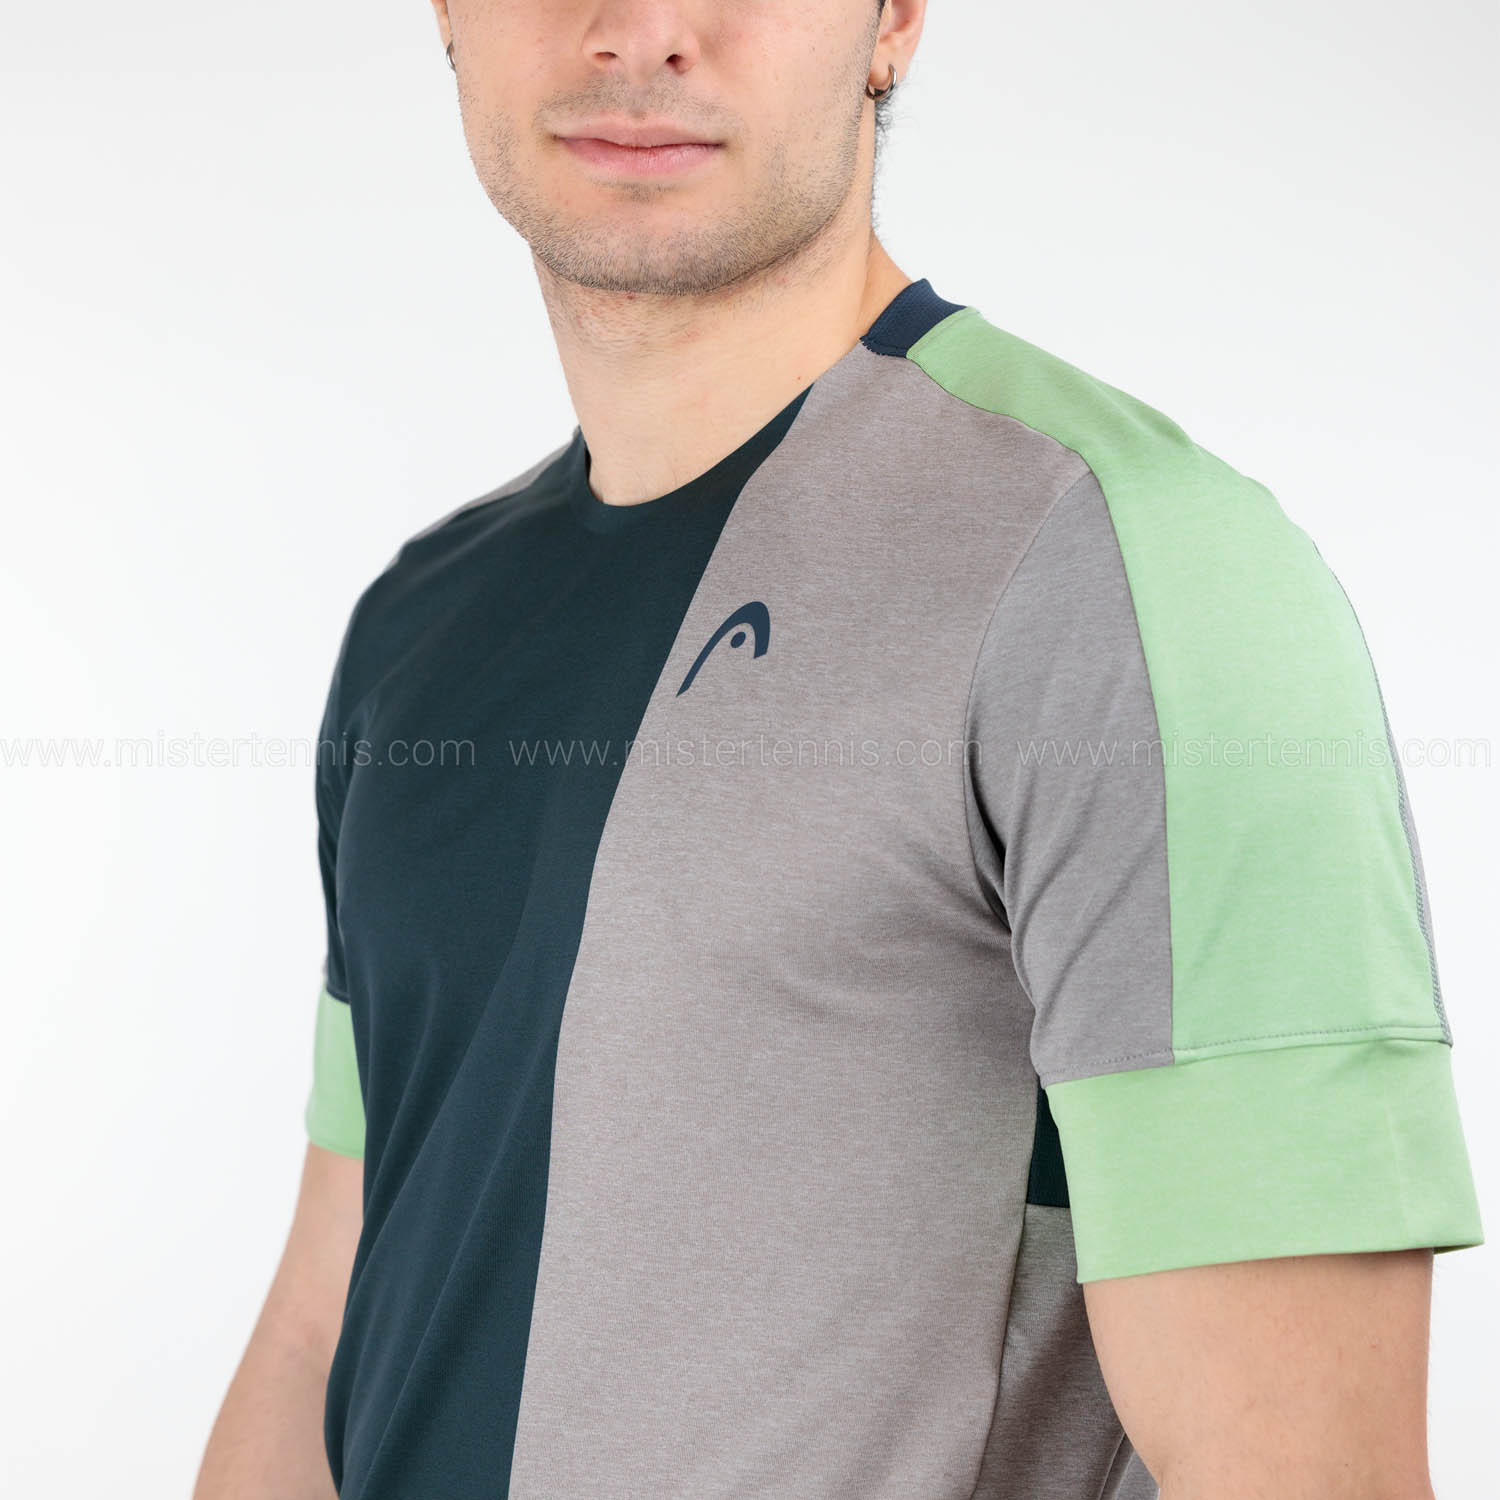 Head Play Tech Pro Camiseta - Celery Green/Grey